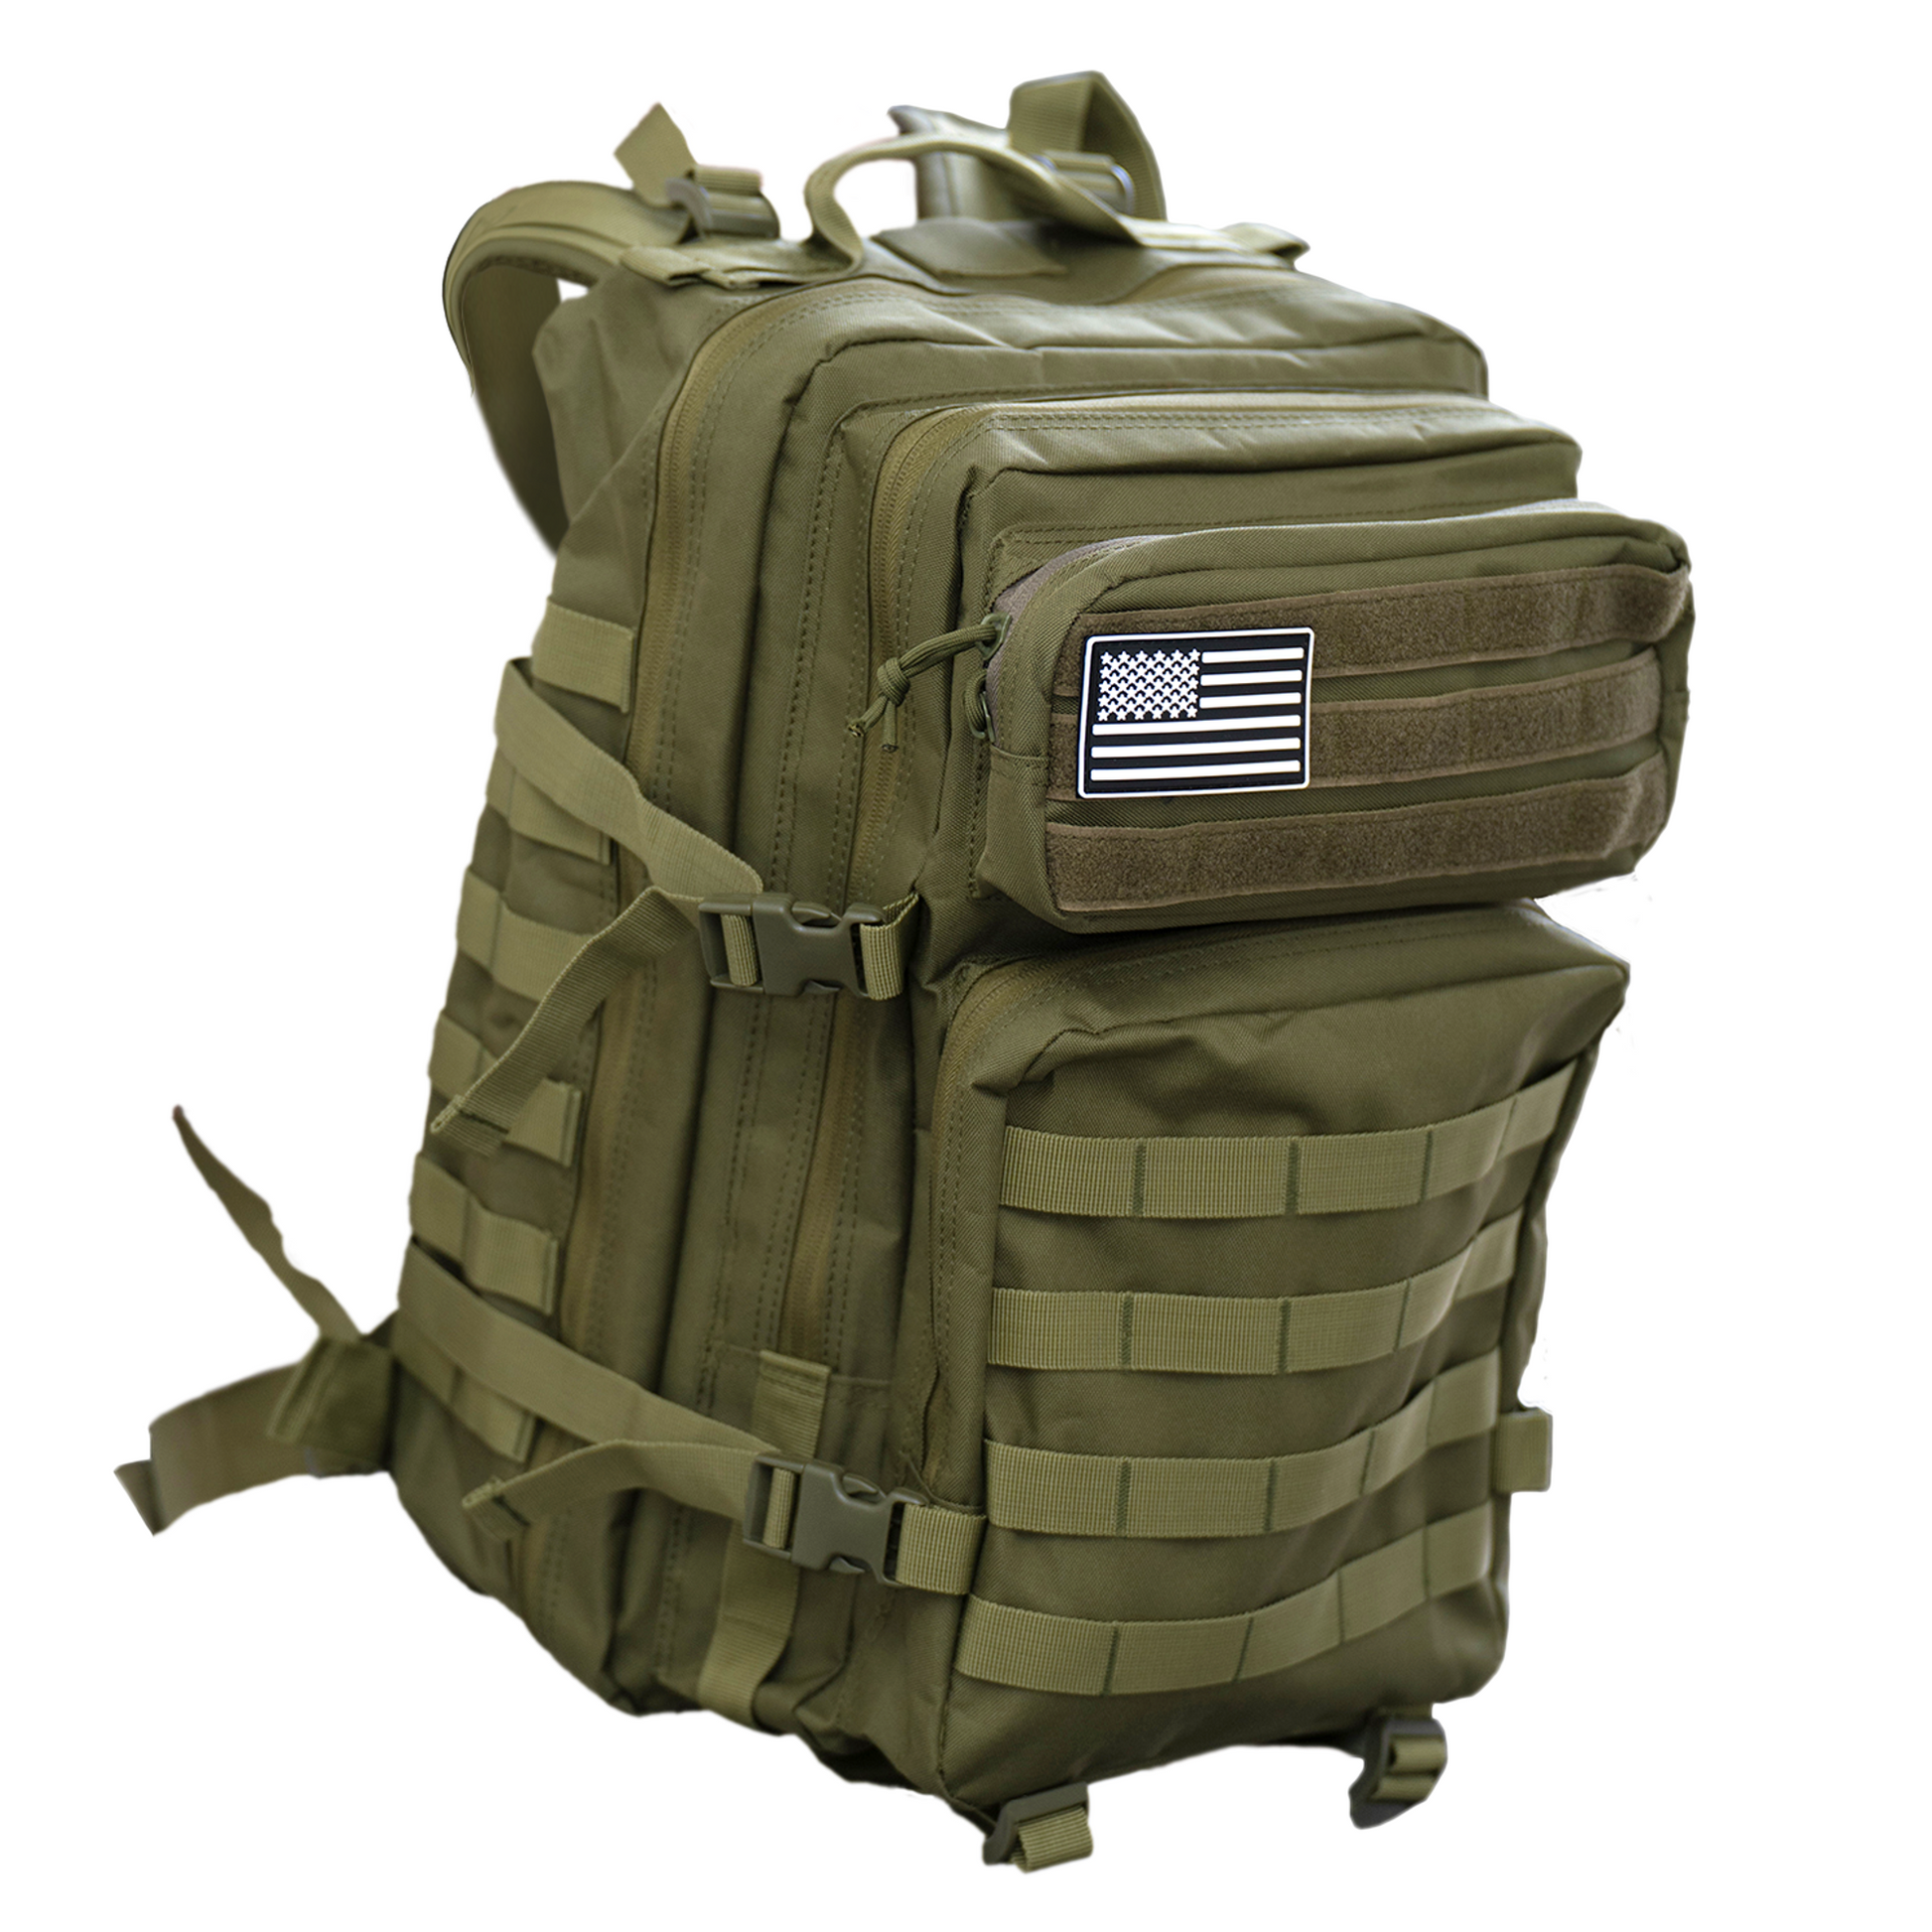 Green 40L tactical backpack